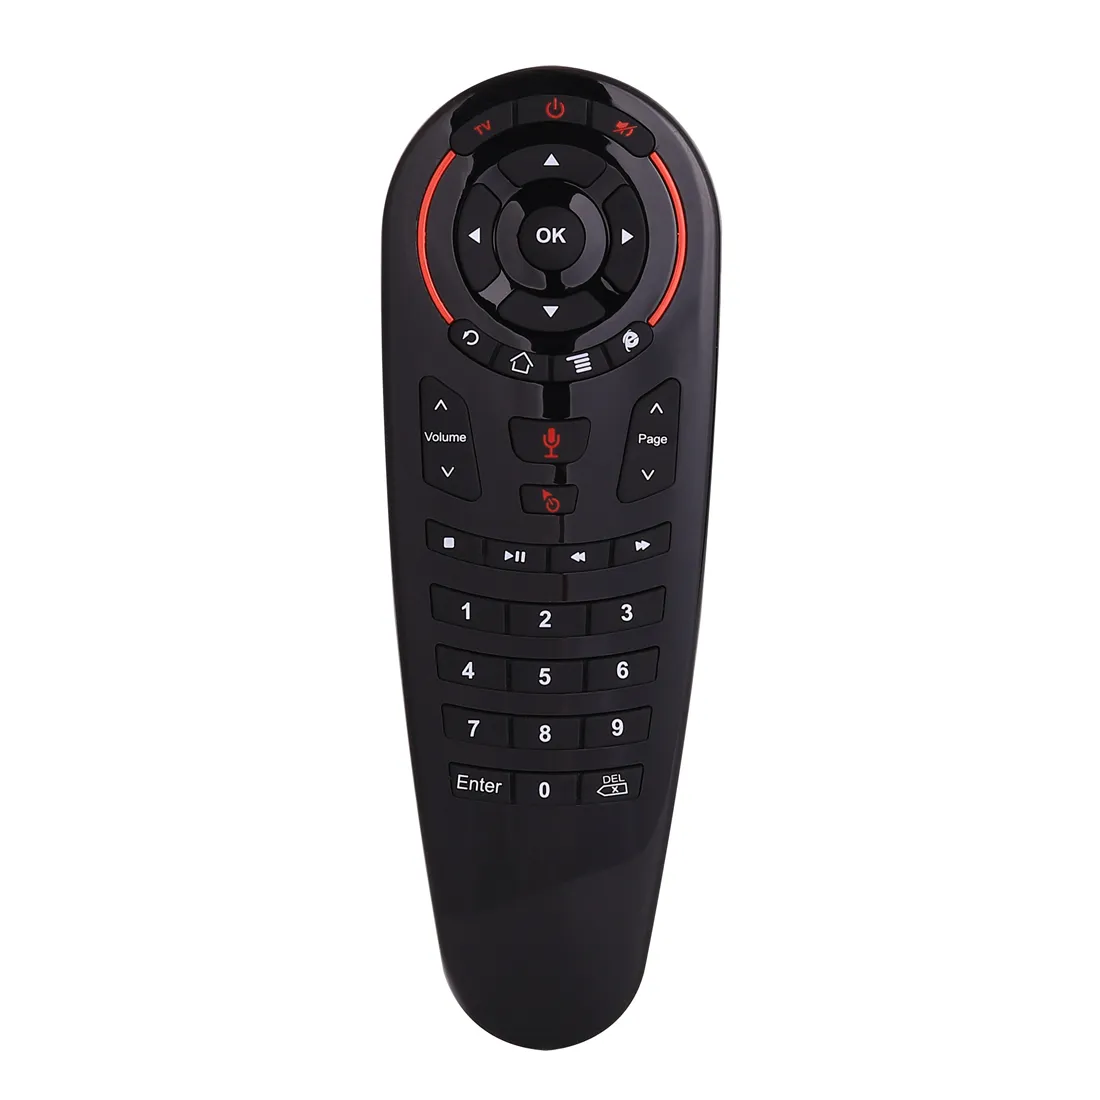 G30 Voice Air Mouse 33 teclas IR aprendizaje 2,4G teclado inalámbrico g30s voz Universal Control remoto Gyro para Android TV box PC